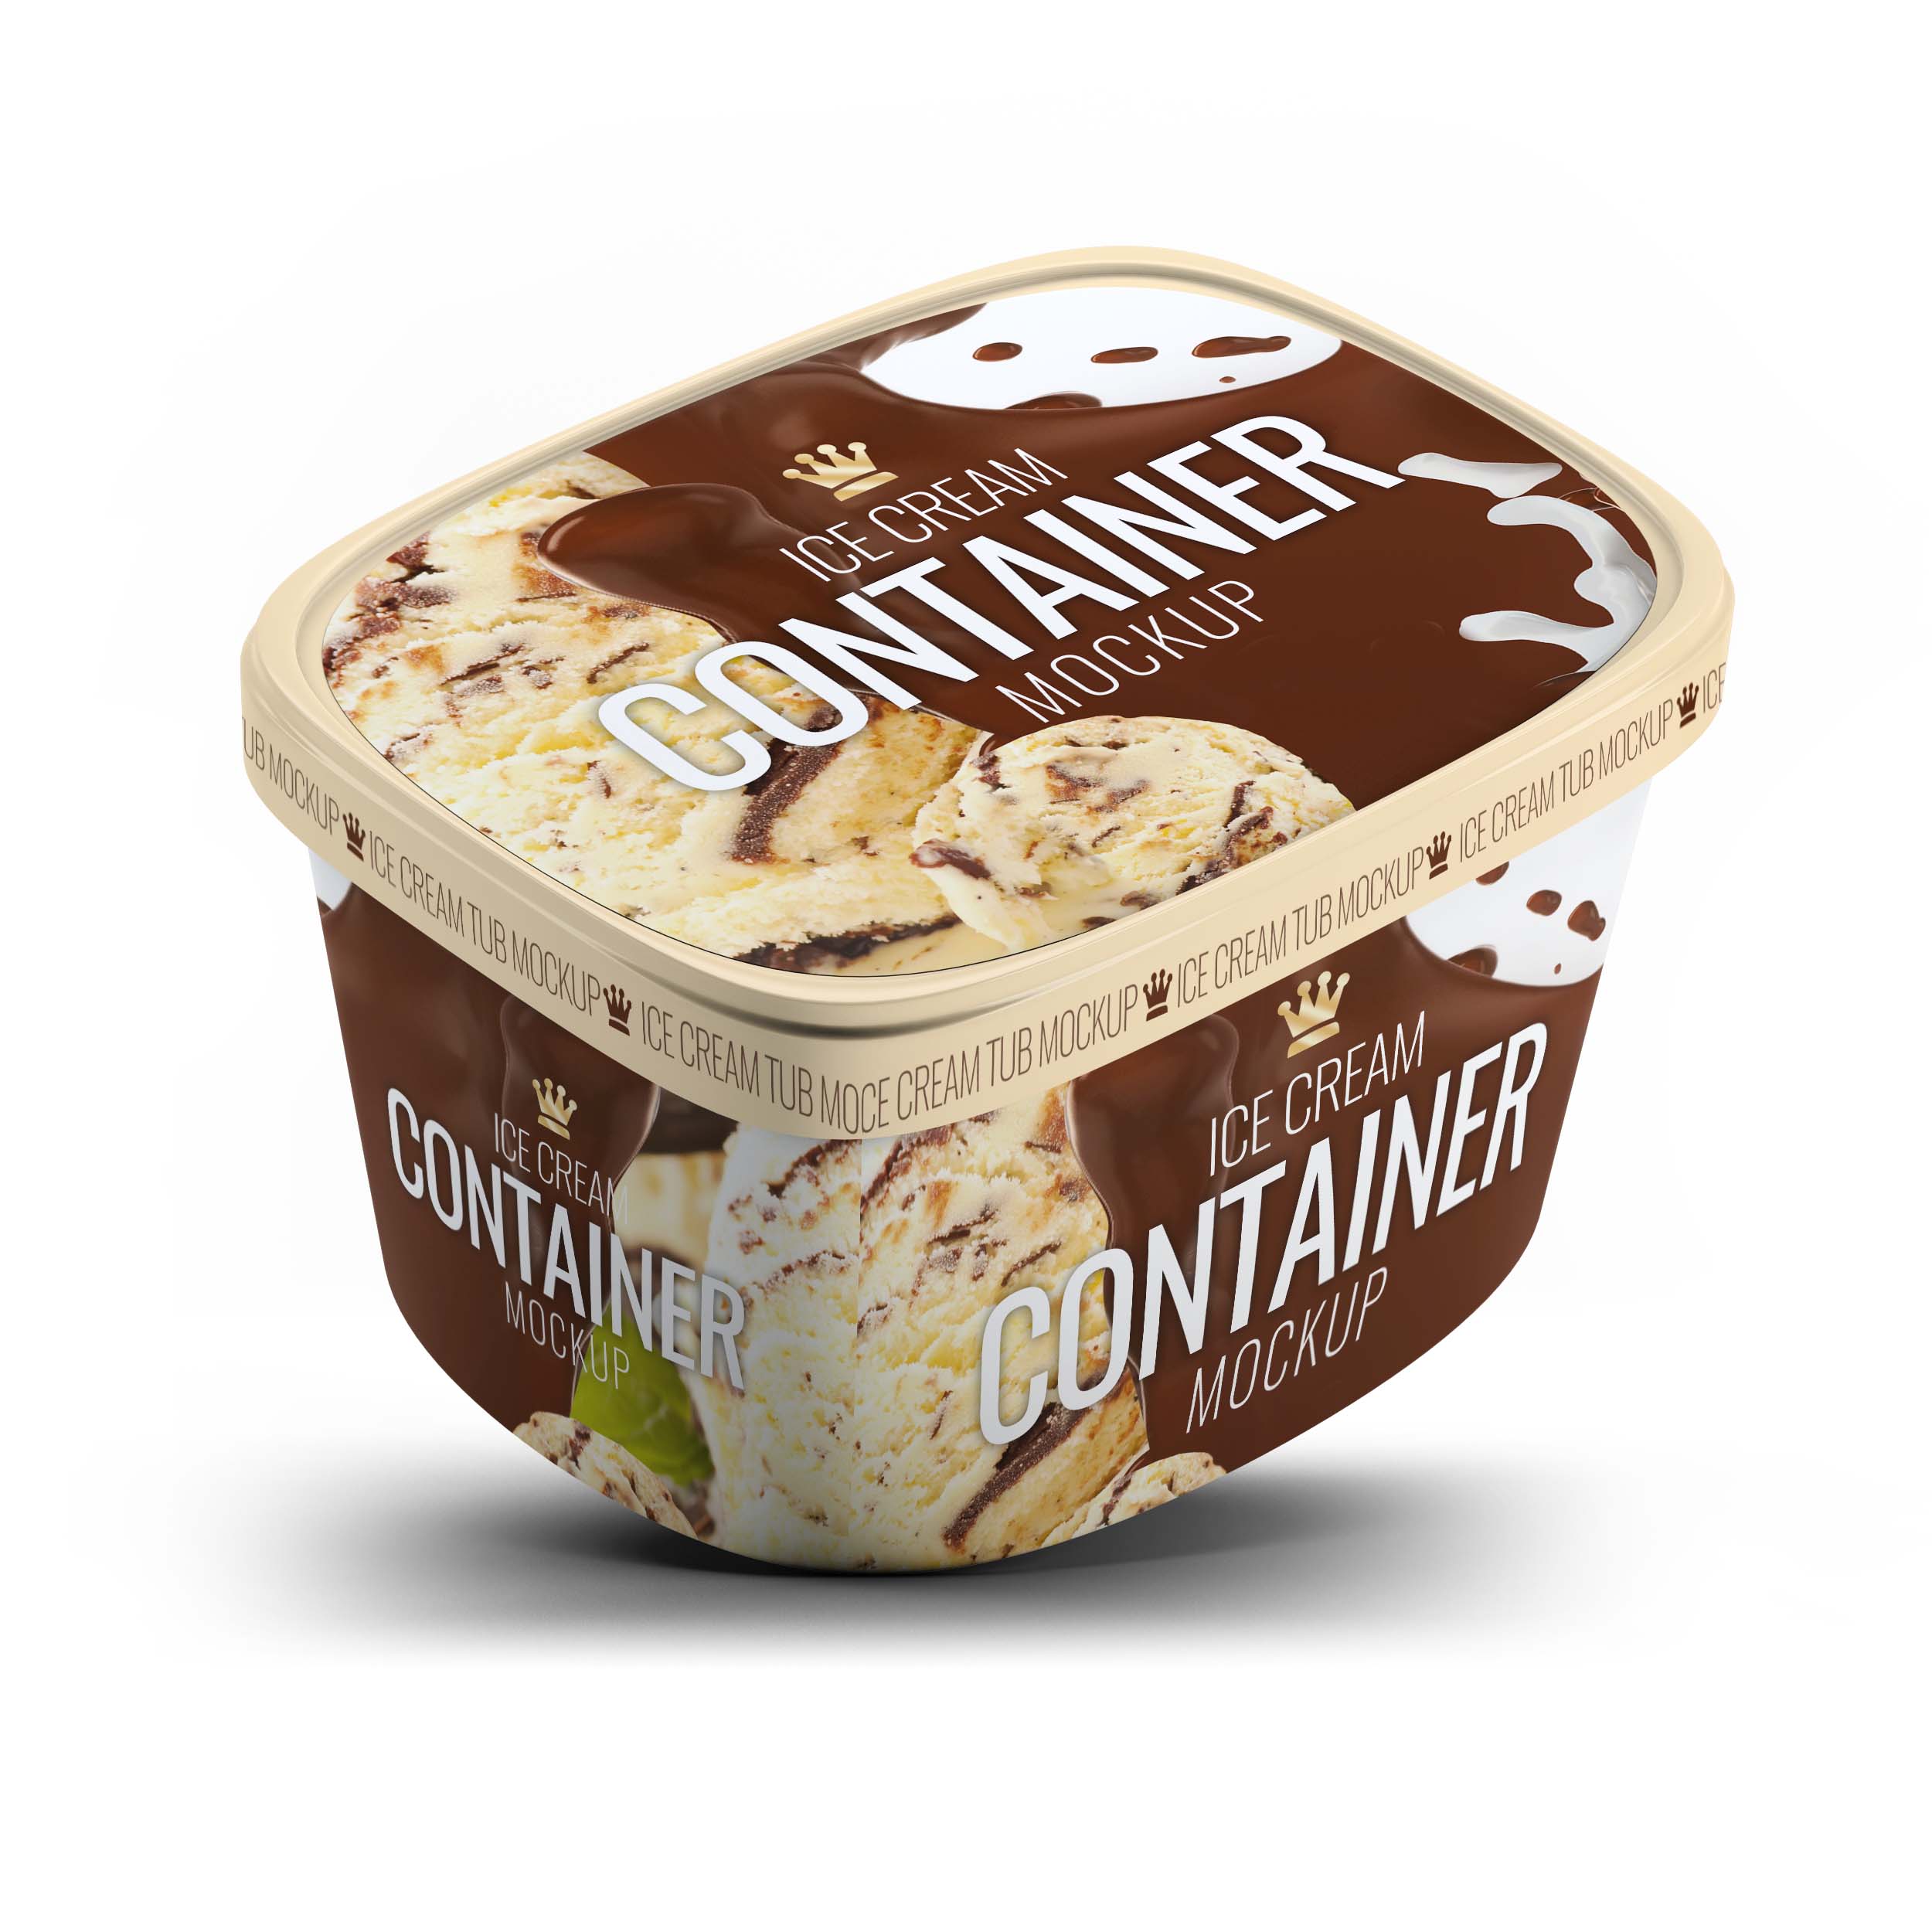 冰淇淋塑料盒包装样机PSD源文件08 Ice Cream Container Mock-Up